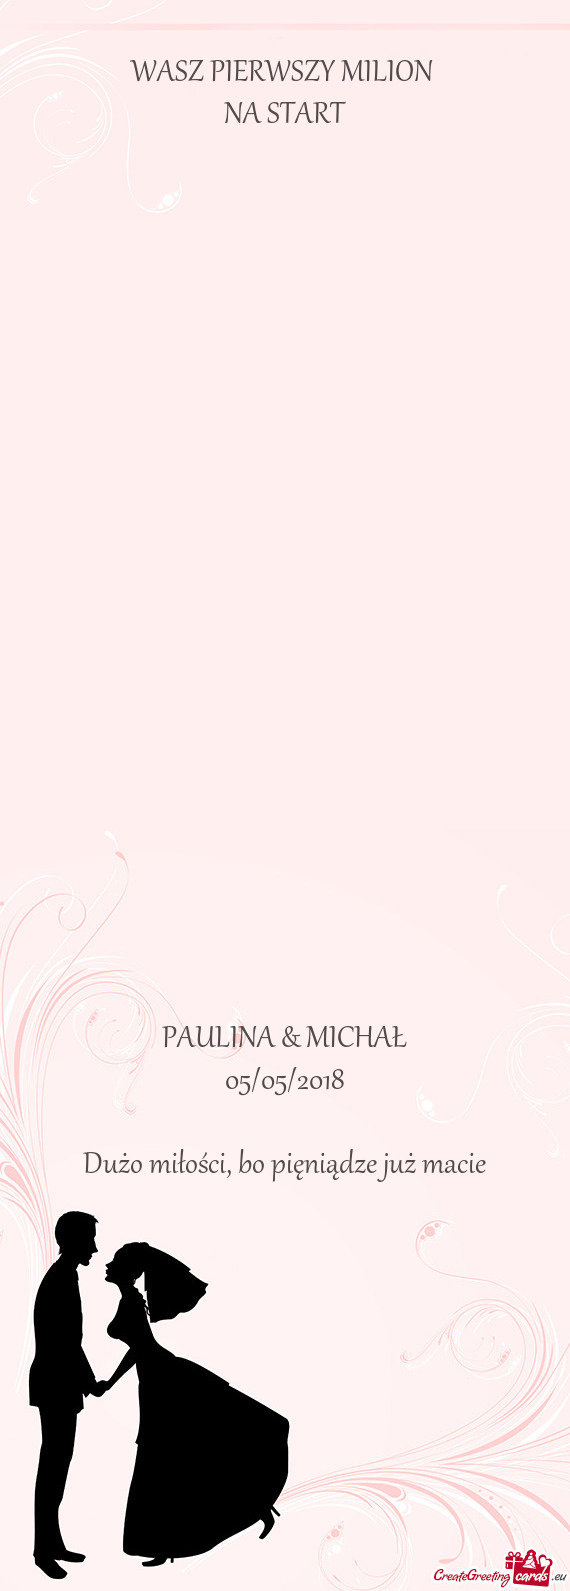 PAULINA & MICHAŁ